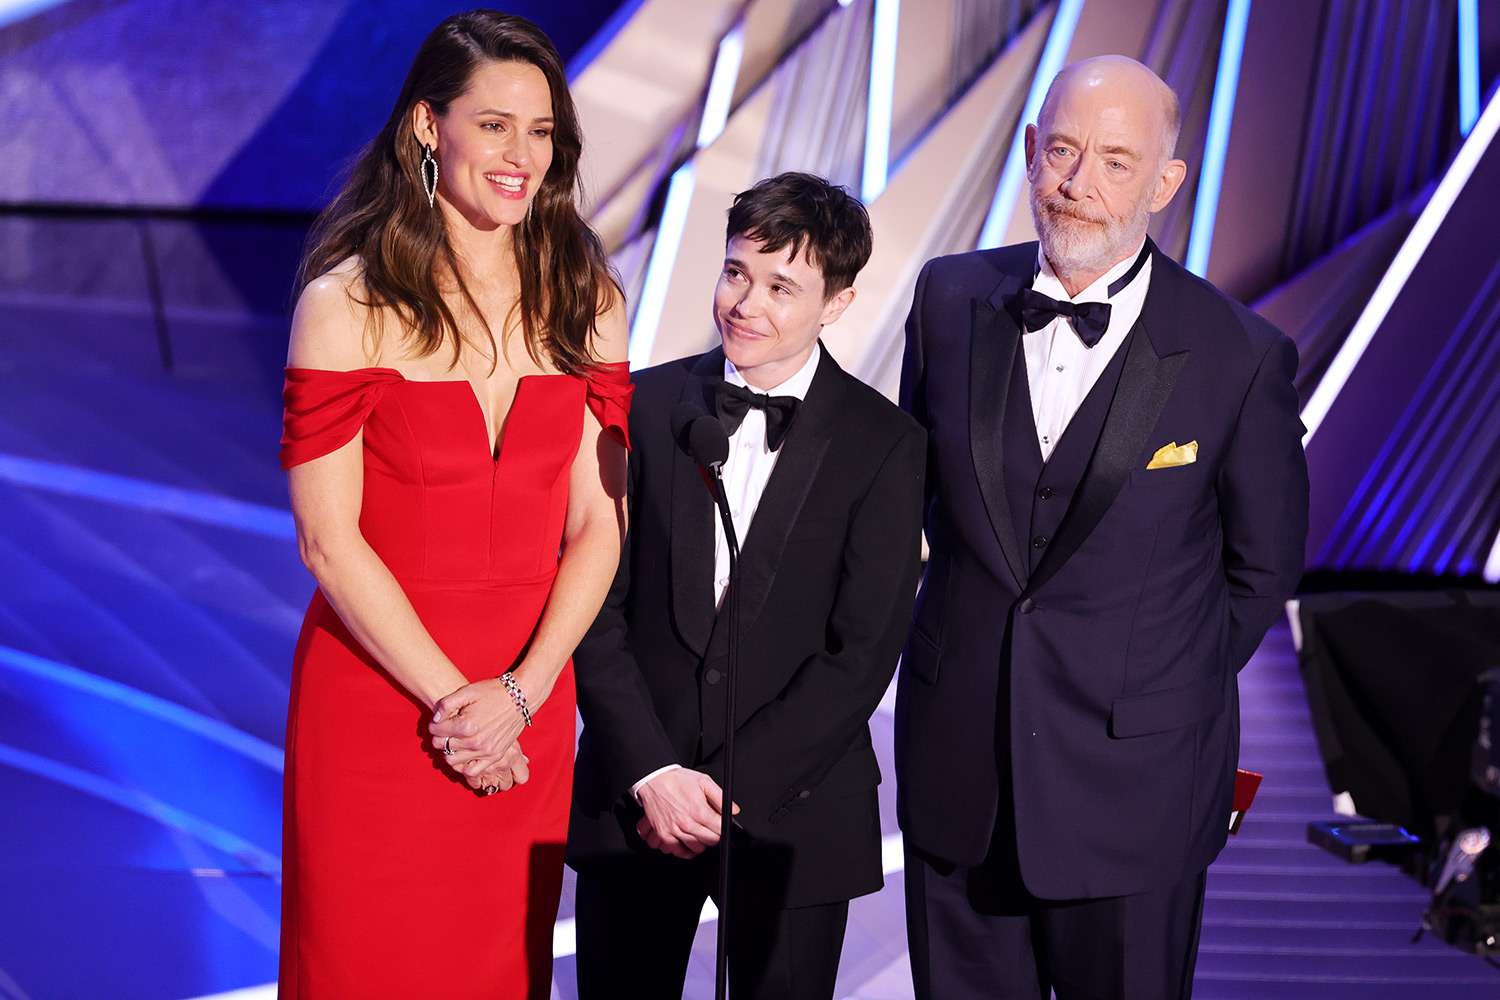 Juno cast reunion at the Oscars 2022 with Elliot Page, Jennifer Garner |  EW.com